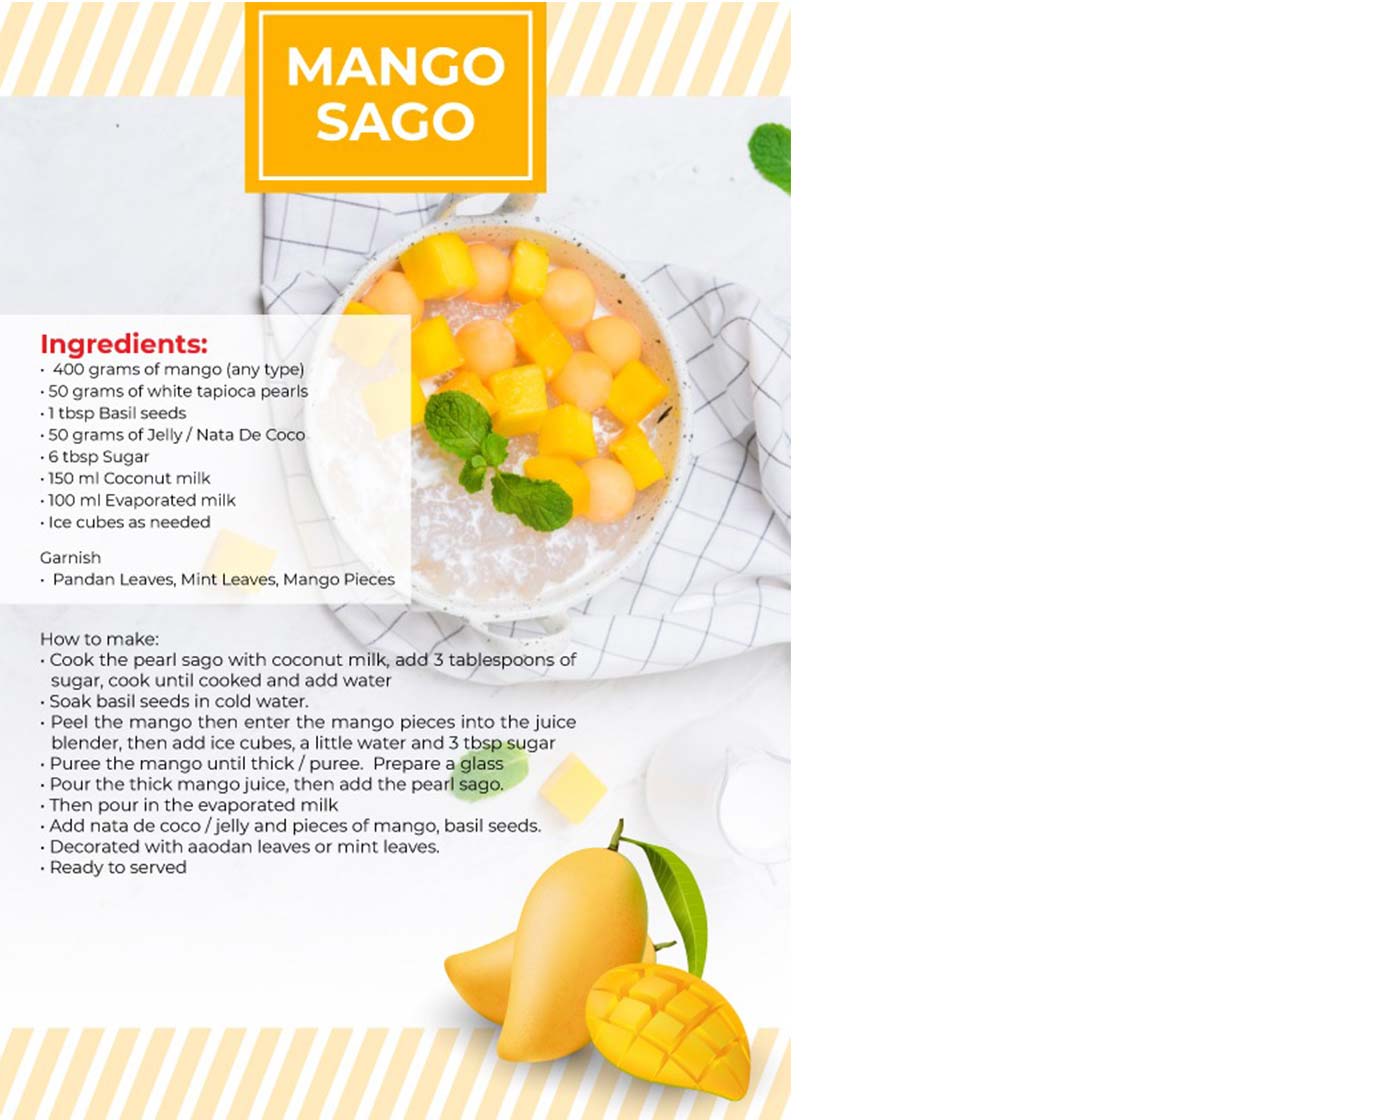 Make your own Mango Sago